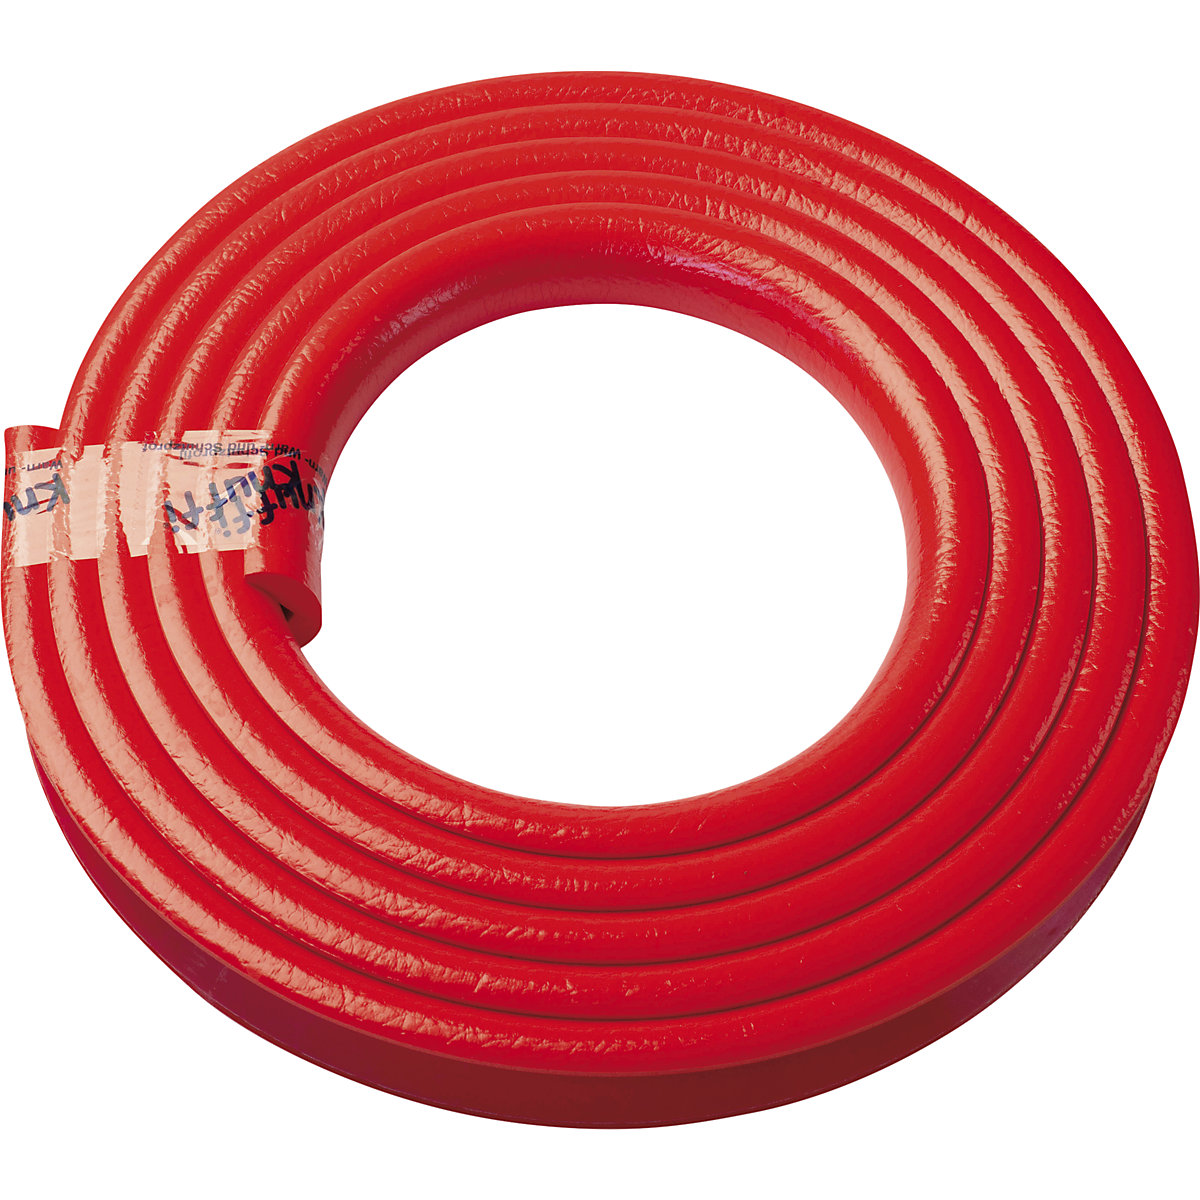 Zaščita vogalov Knuffi® – SHG, tip A, 1 rola po 5 m, rdeče barve-17